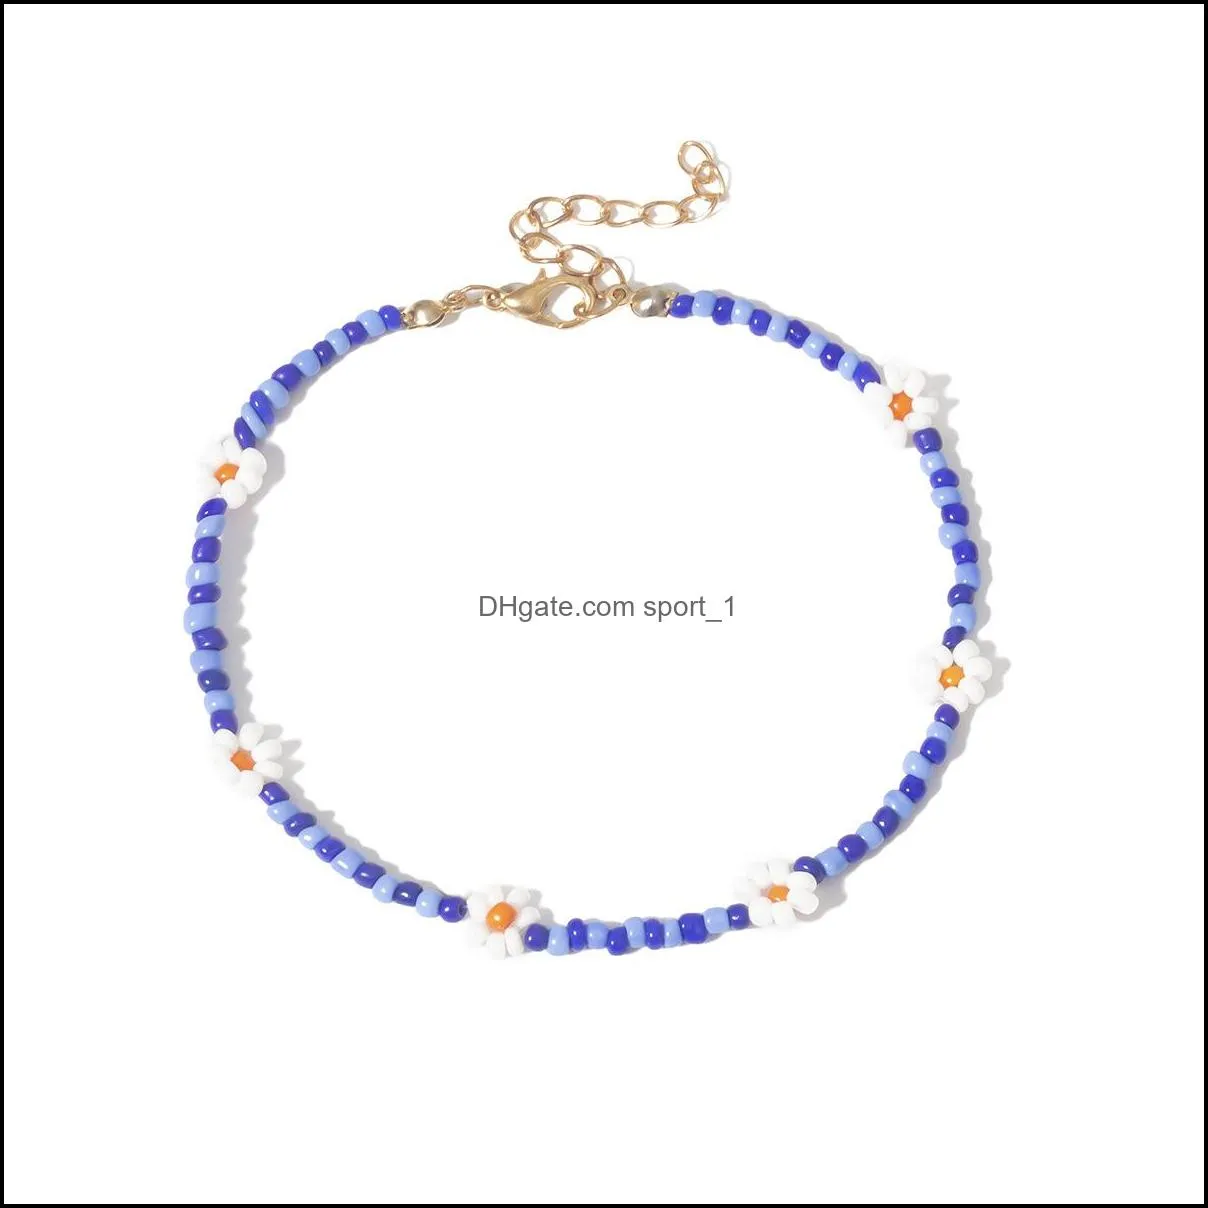 Sea Turtle Beads Bracelets For Women Men 2 Colors Natural Stone Strand Elastic Friendship Bracelet Beach Jewelry Gifts